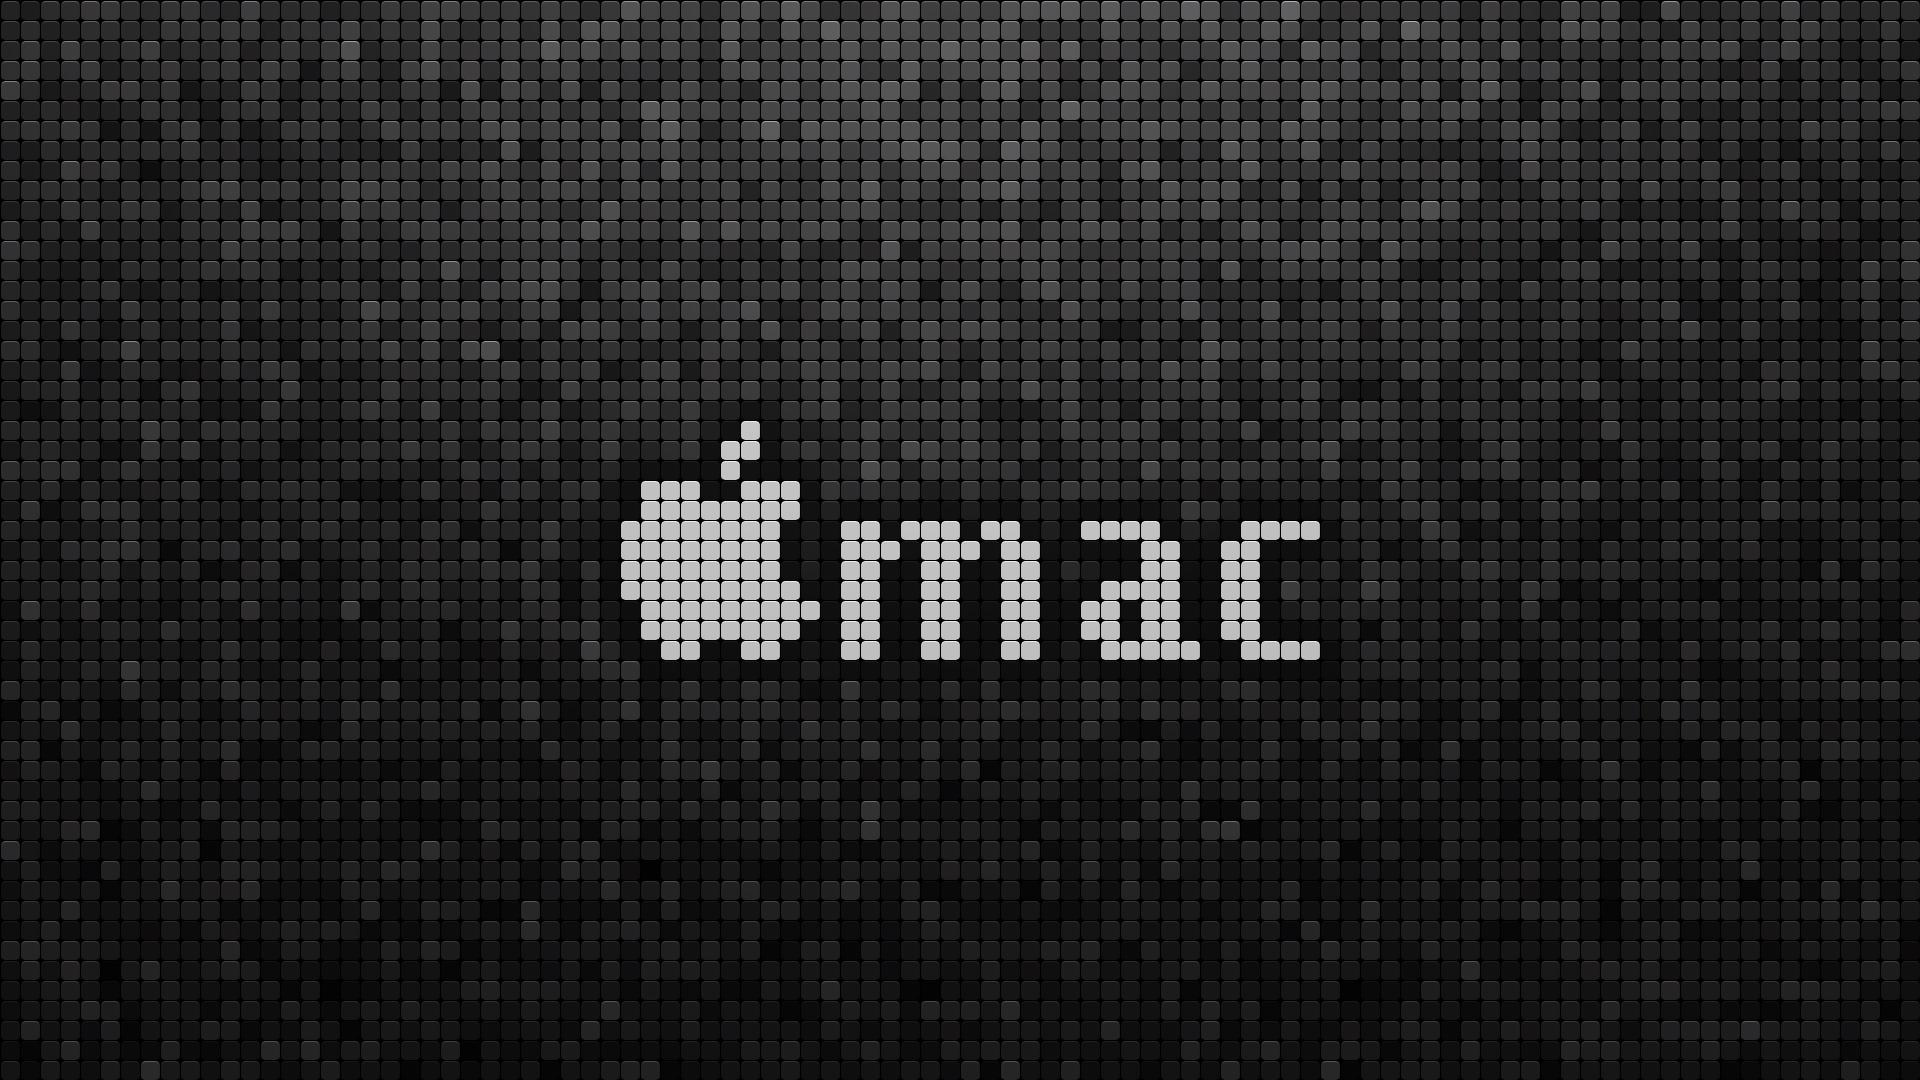 Wallpaper Macintosh Wallpapers